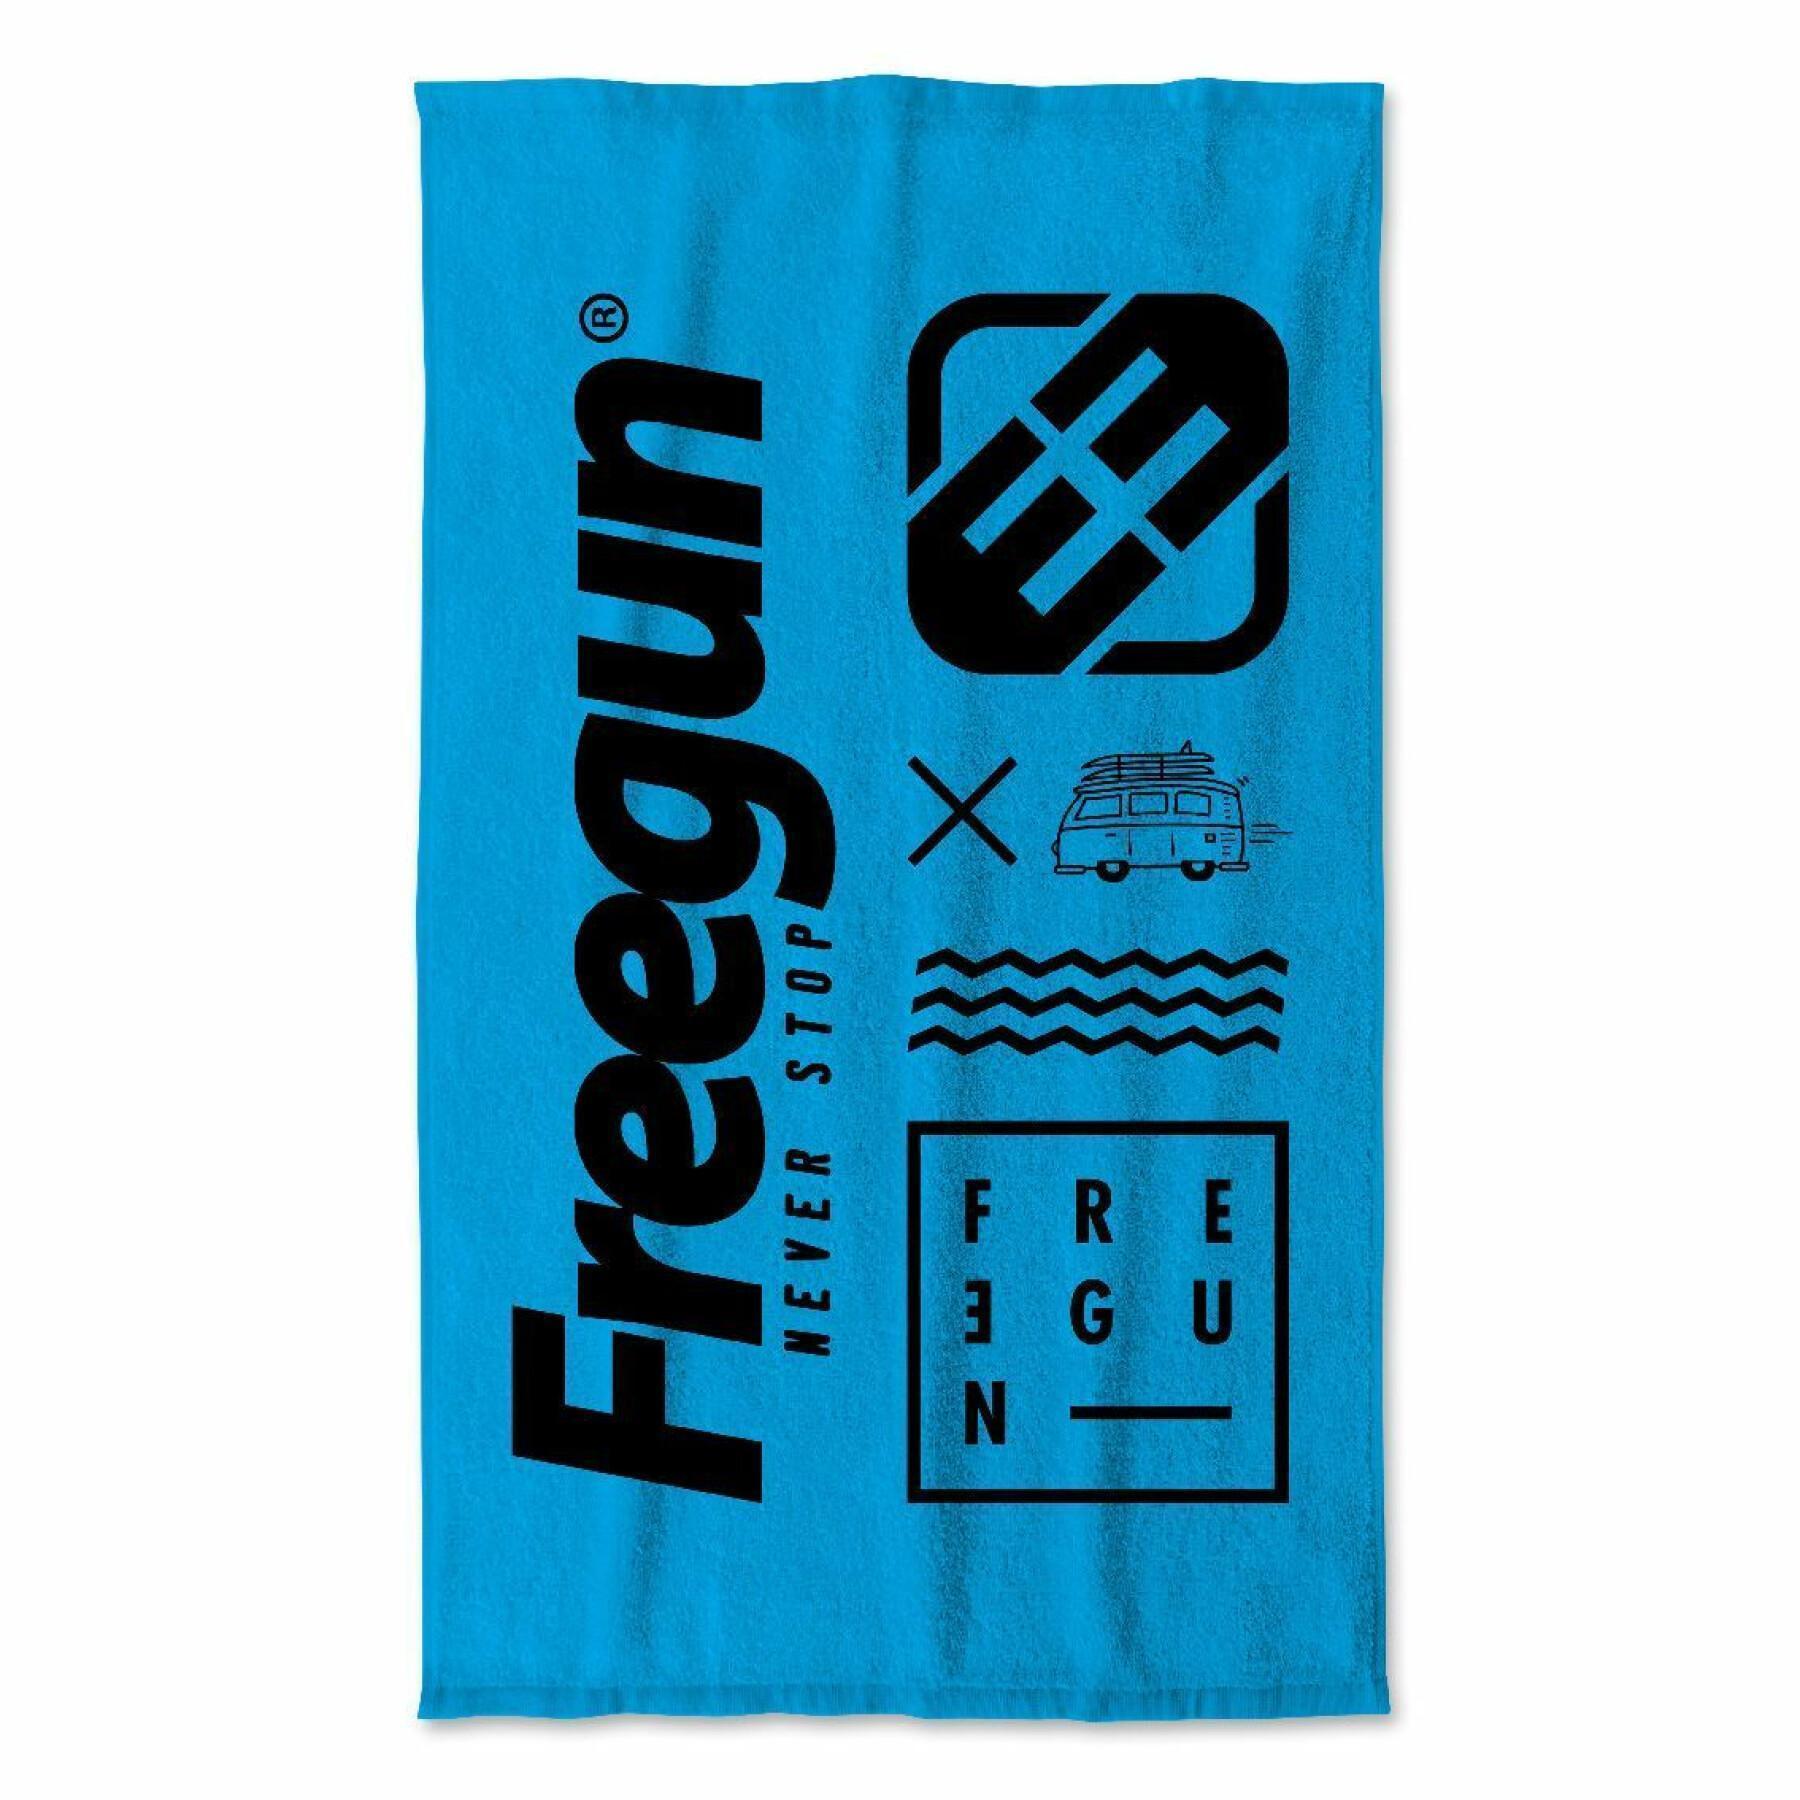 Grote handdoek Freegun